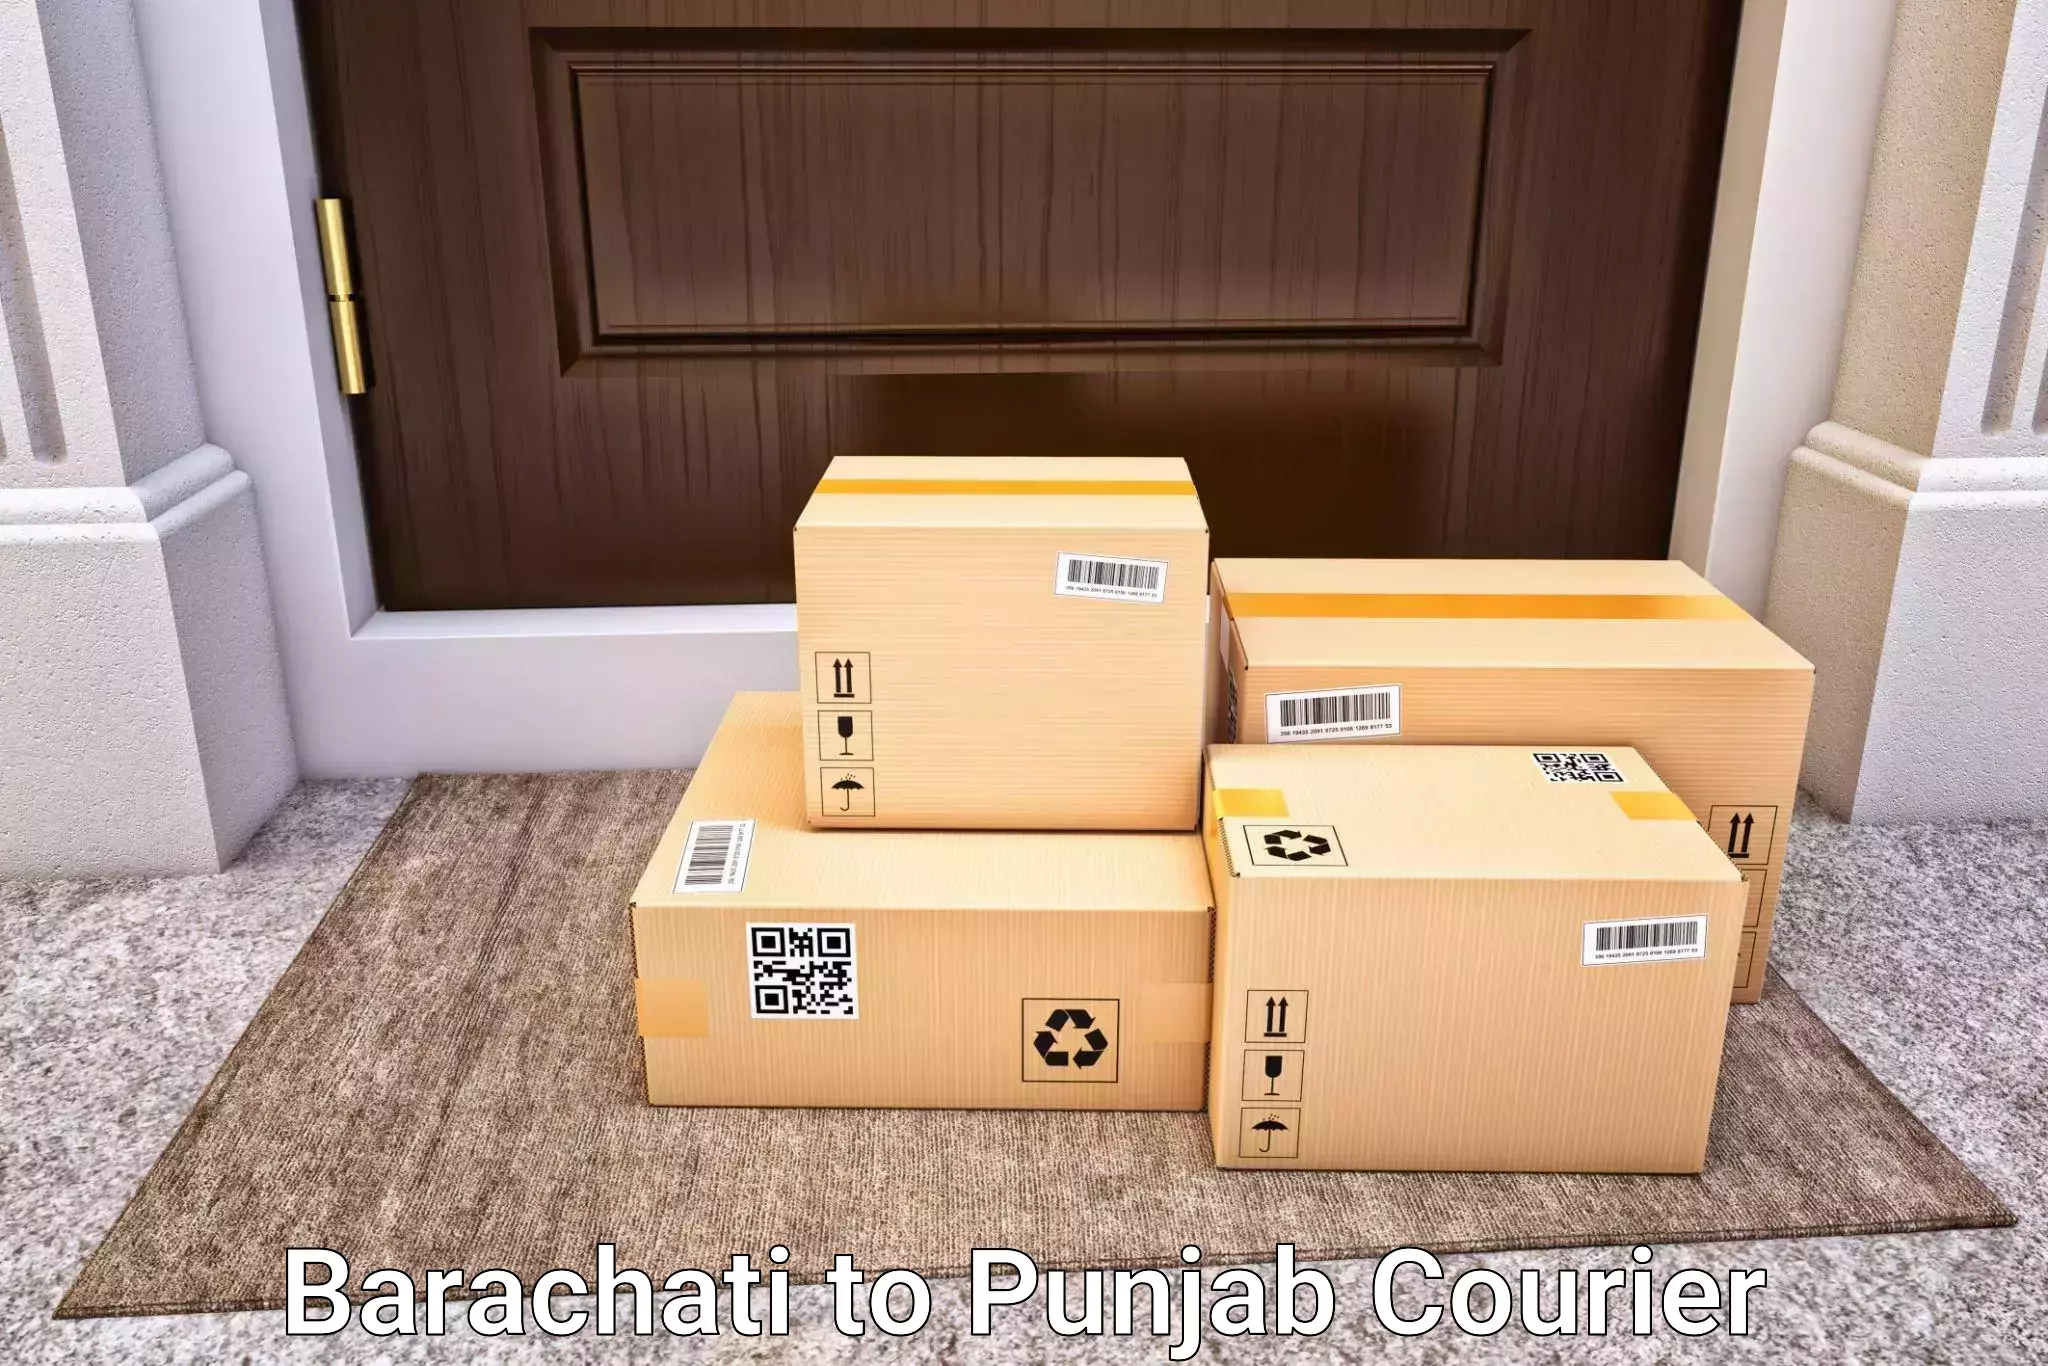 Hassle-free luggage shipping Barachati to Dhilwan